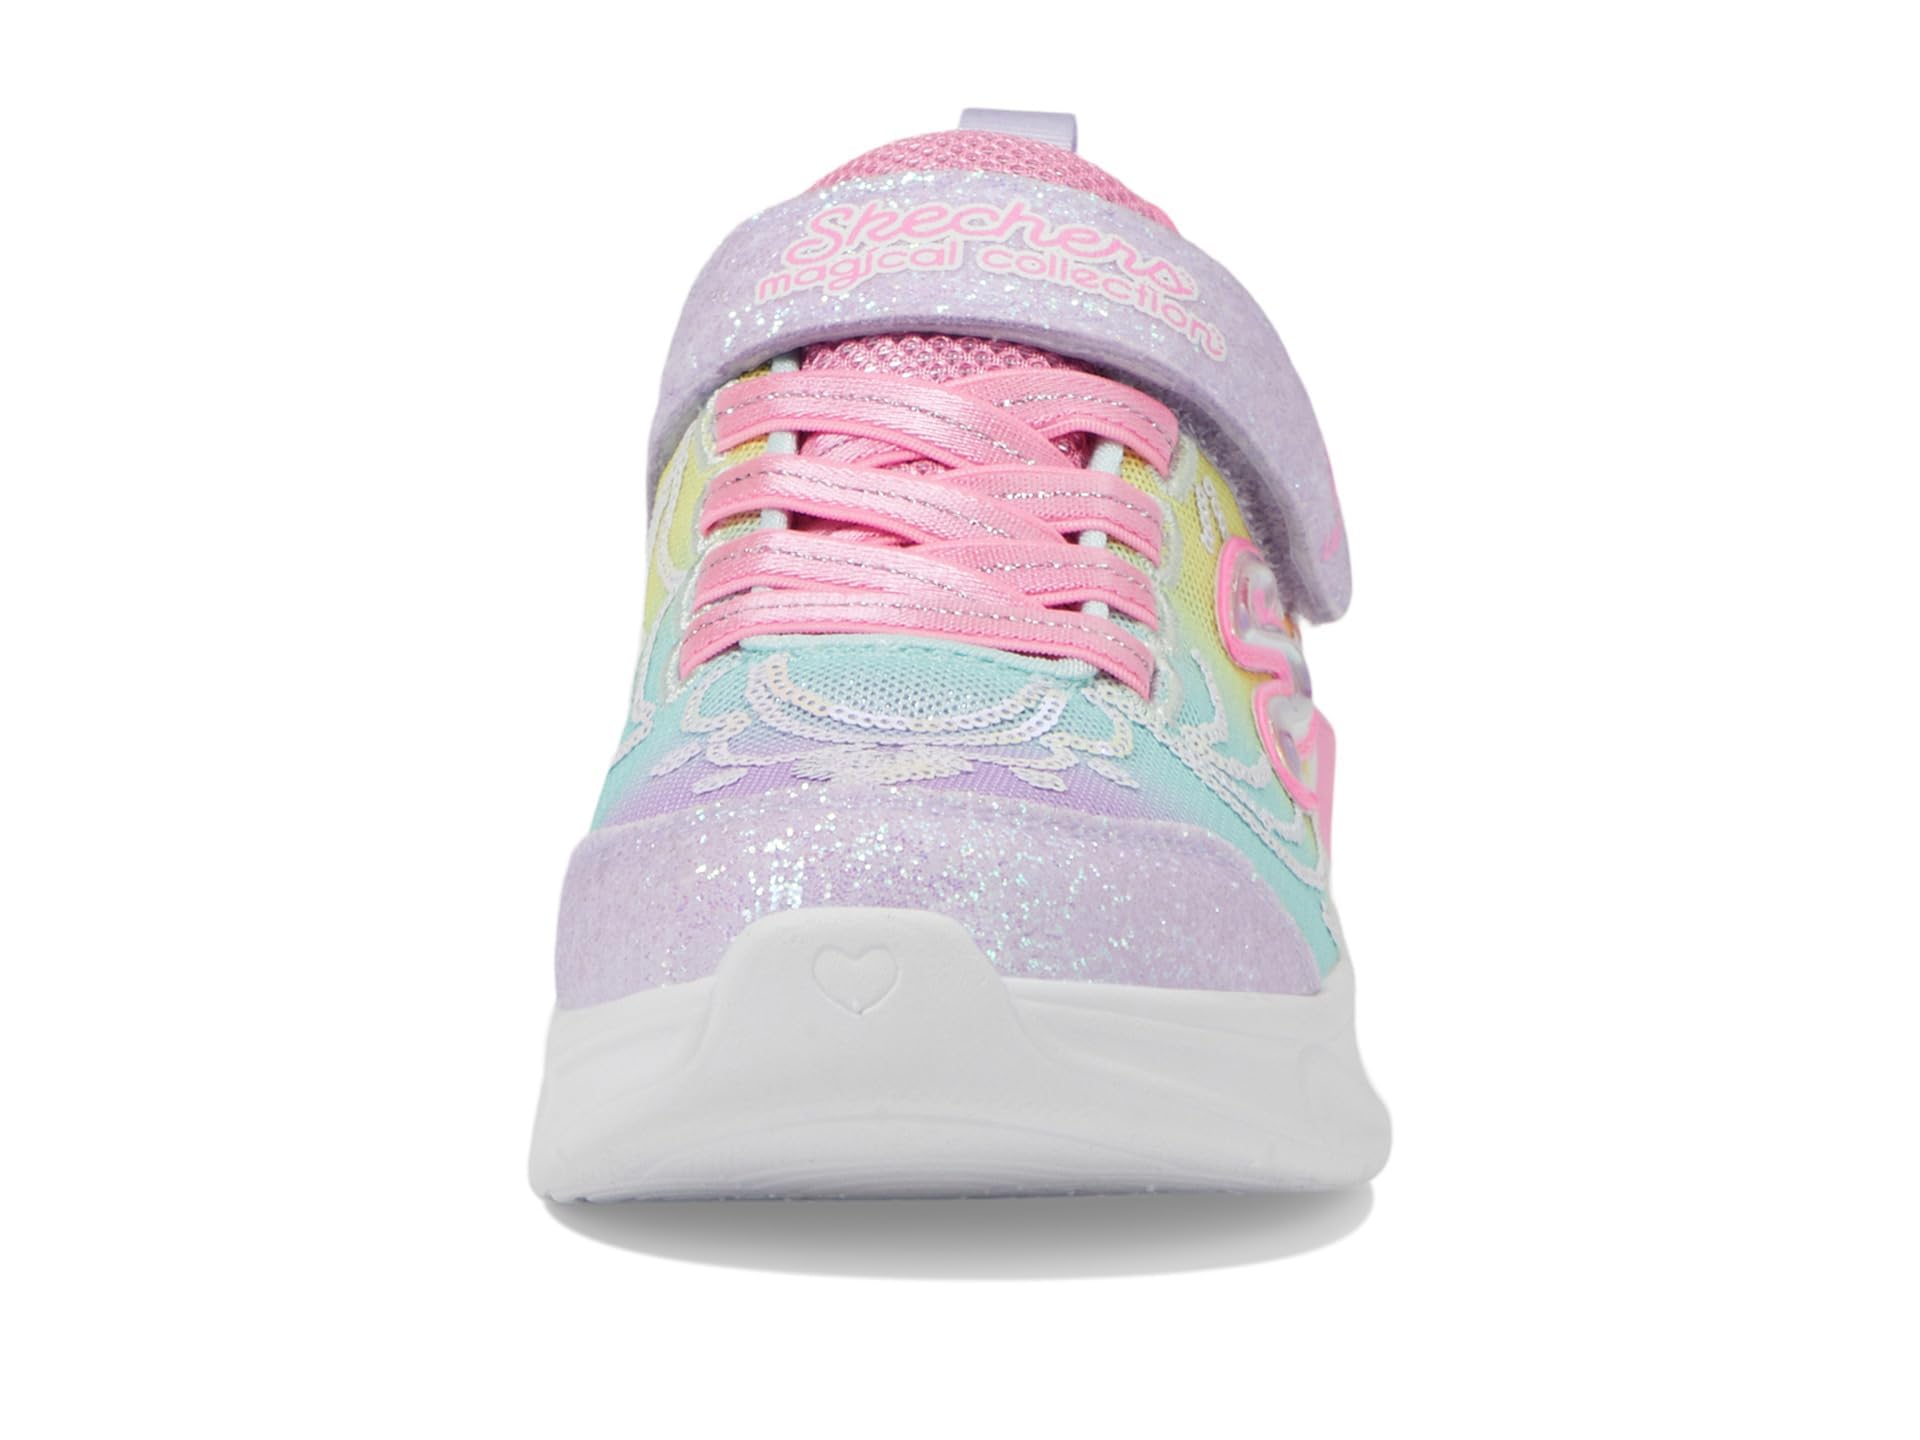 Skechers Unisex-Child Princess Wishes Sneaker